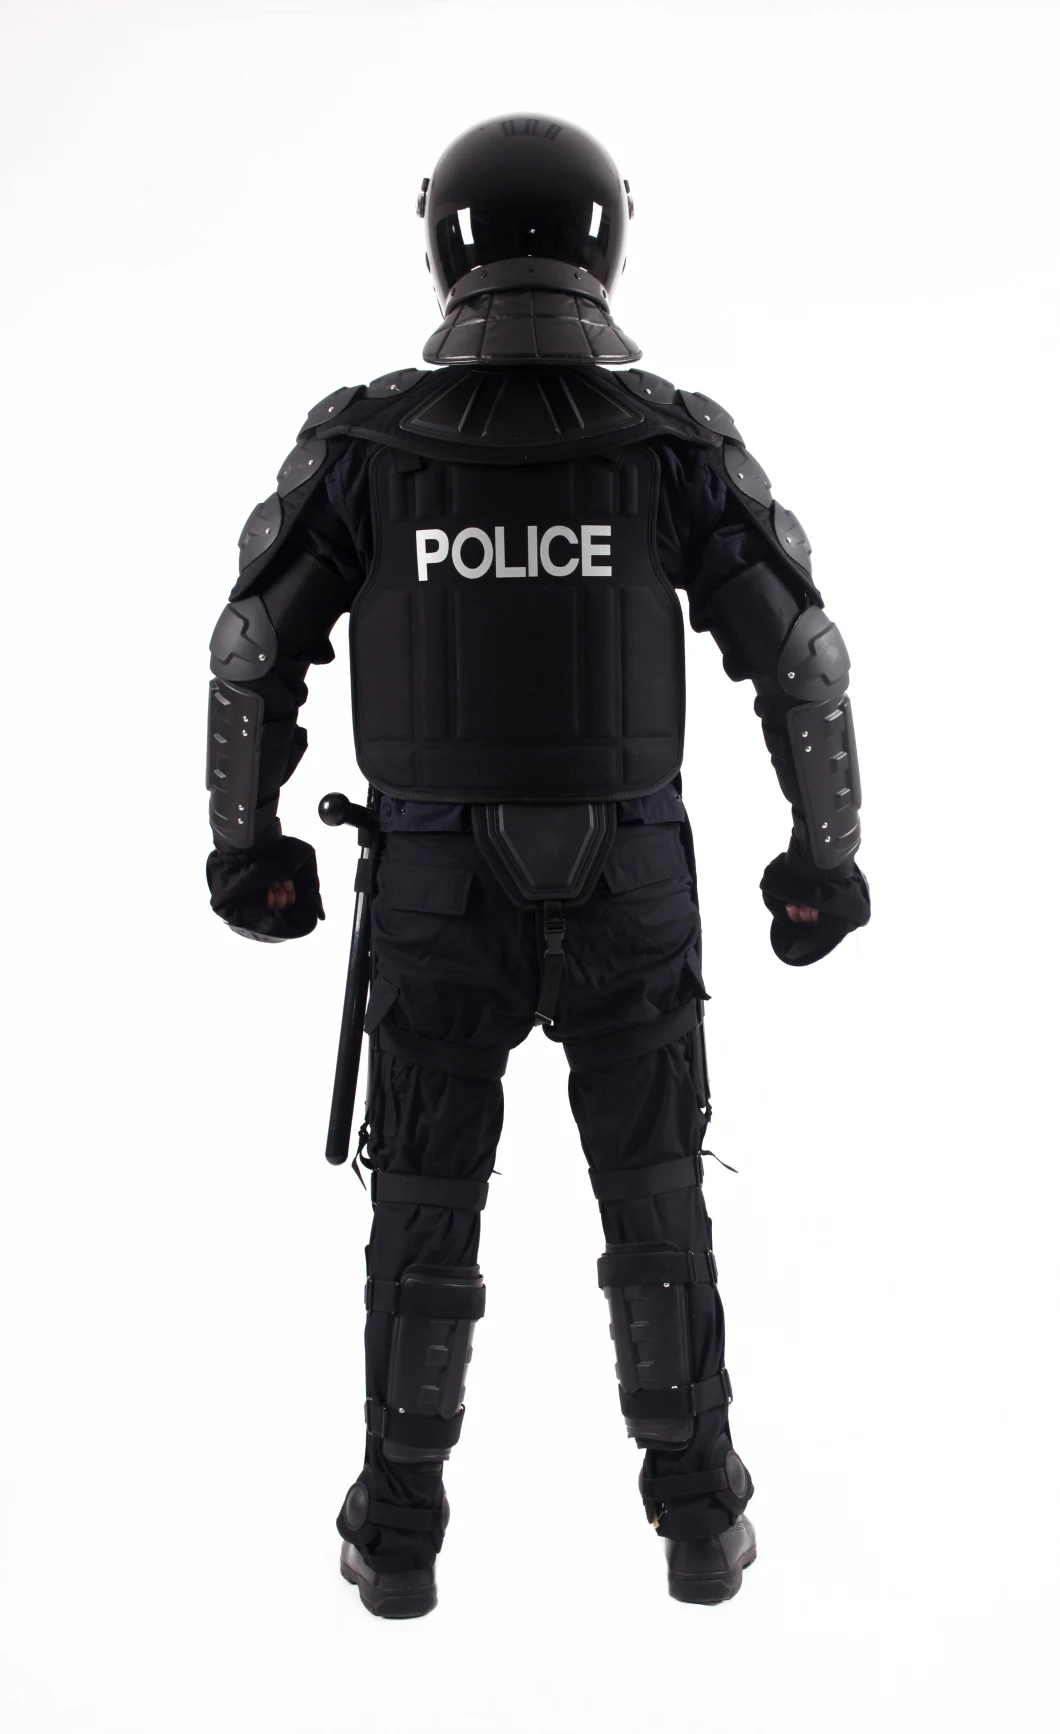 Armor for Full Body Protection Body Vest Neck Groin Protector